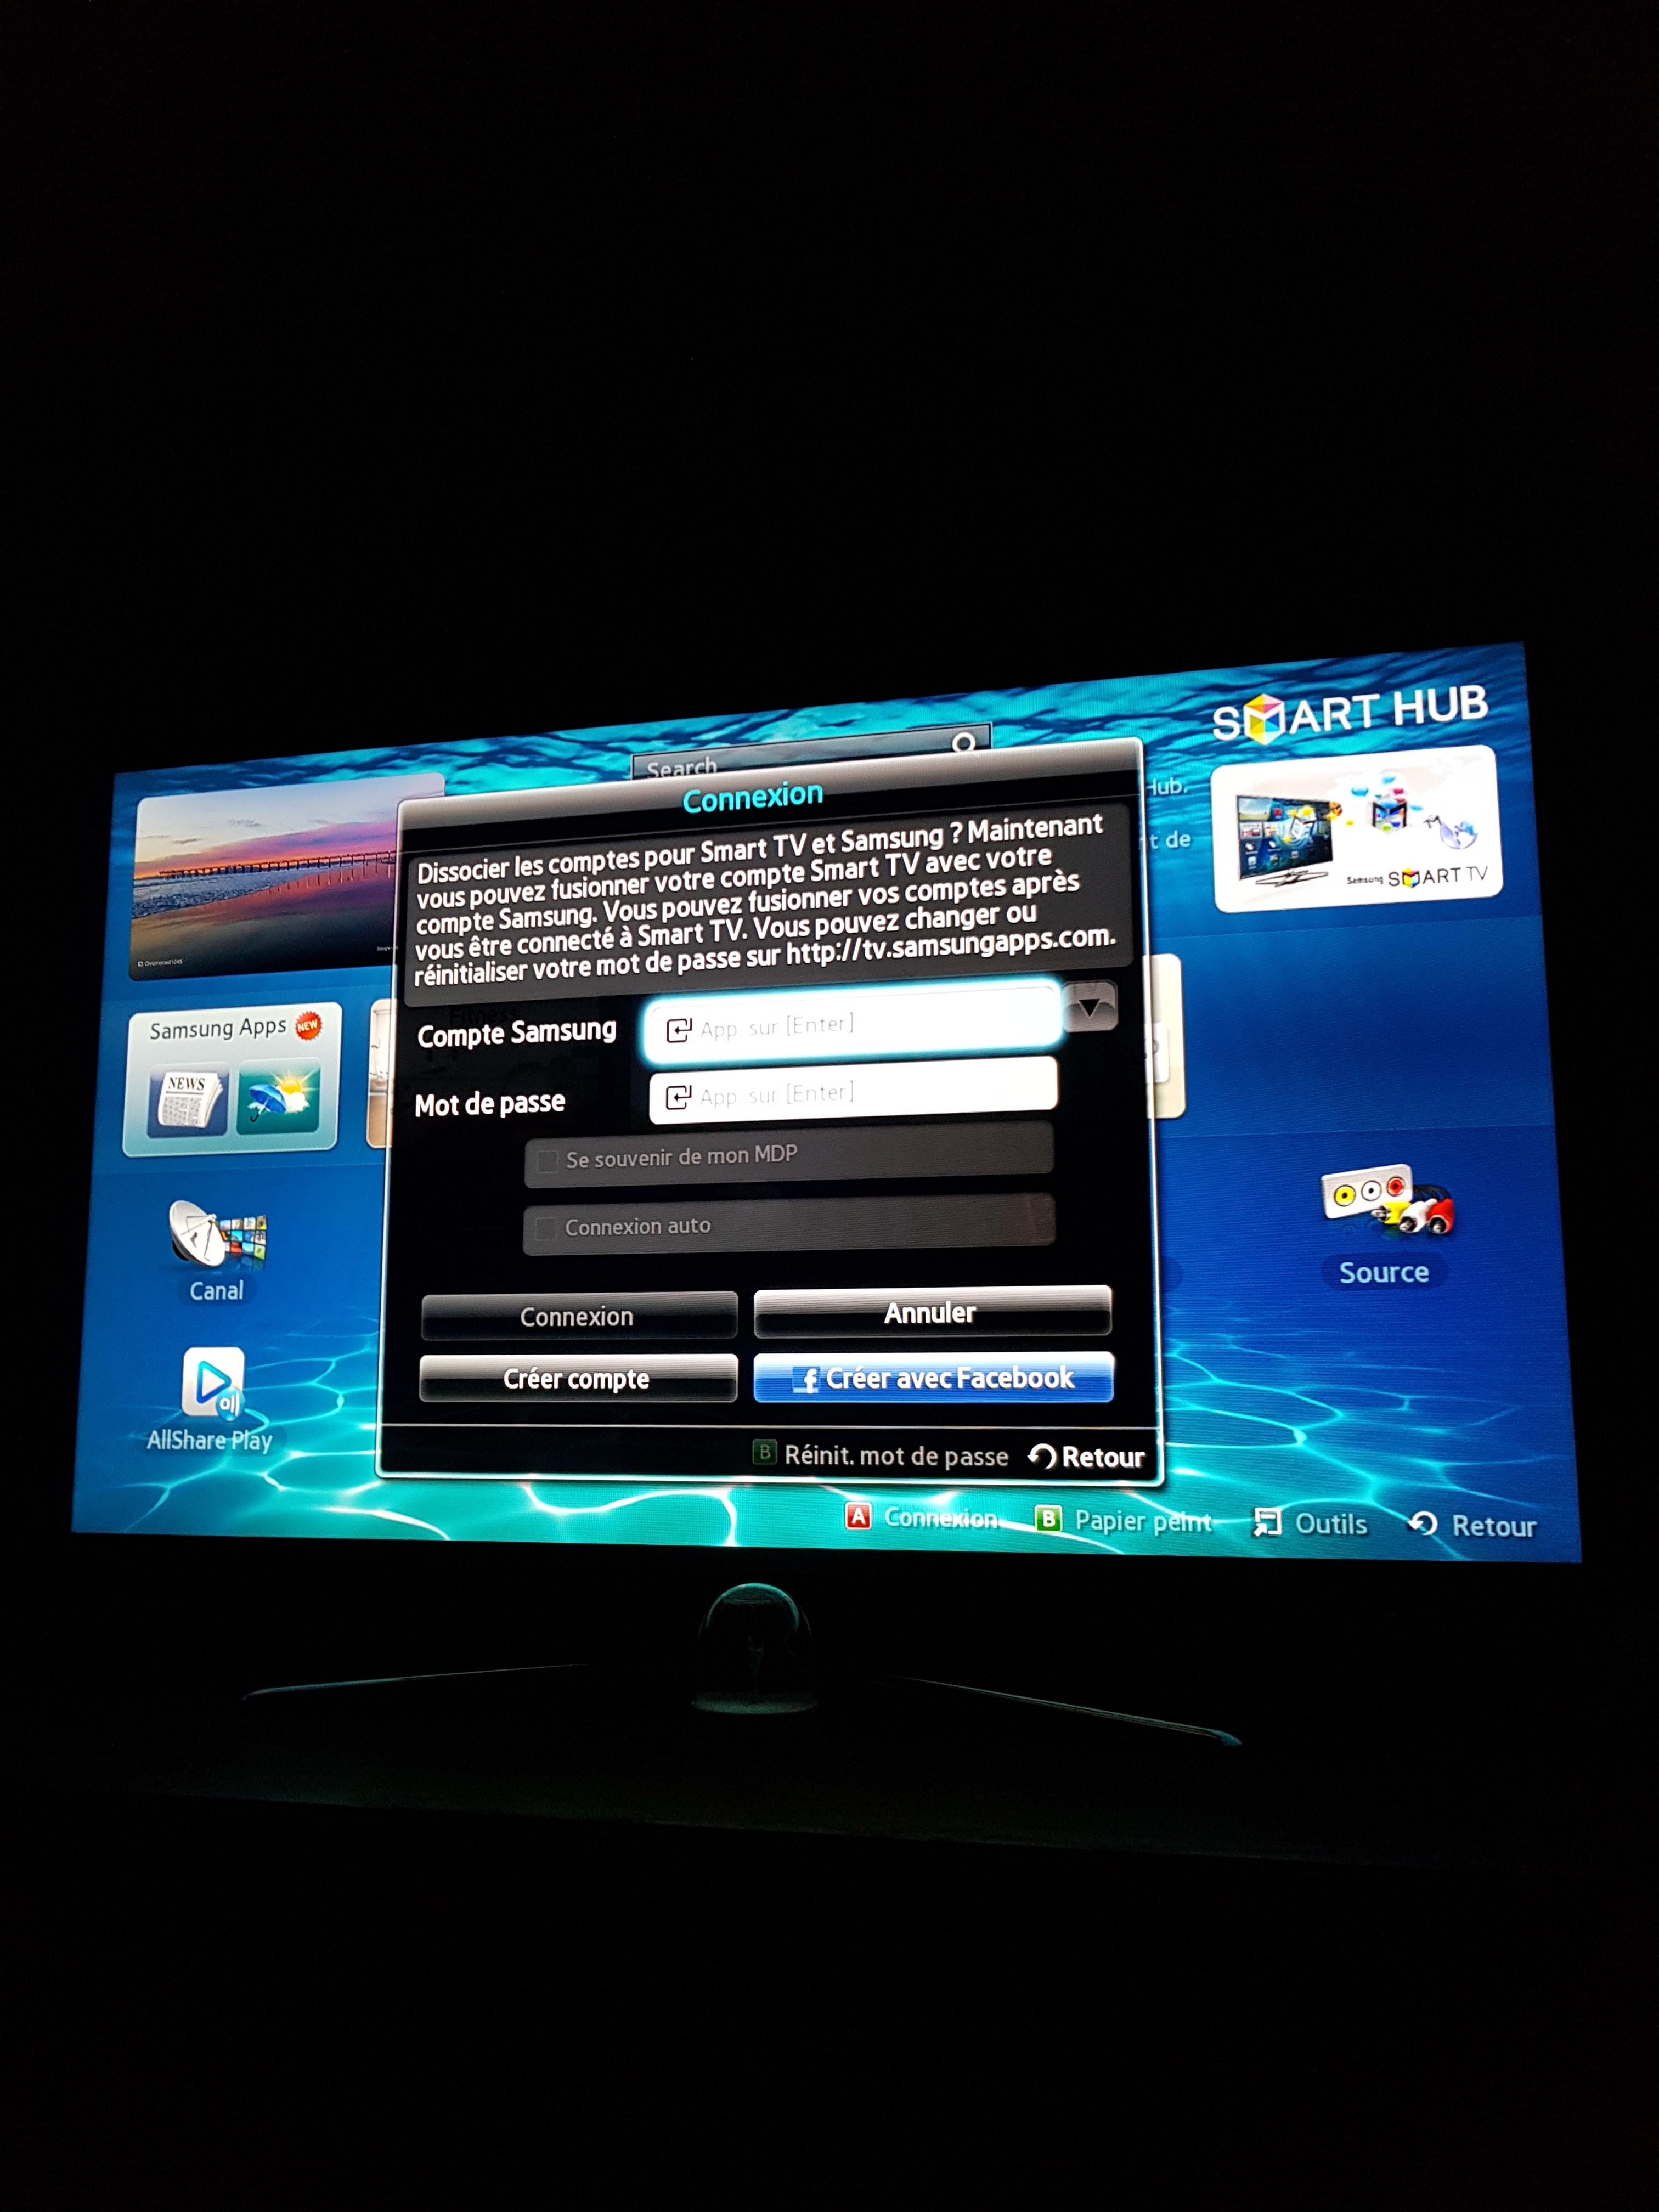 Impossible de connecter smart tv UE46ES6710 - Samsung Community